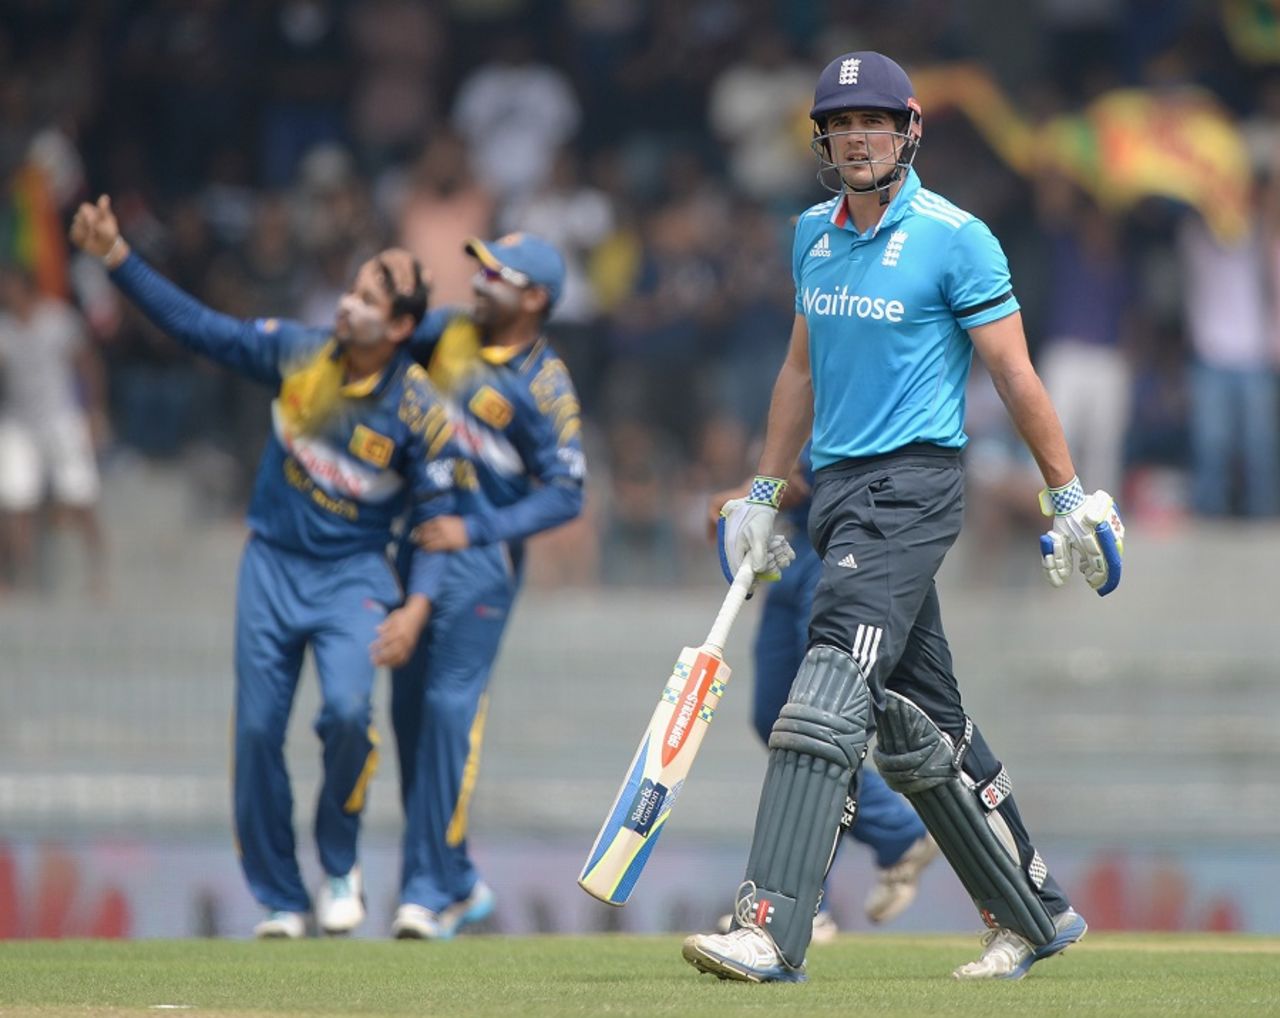 Alastair Cook was caught in the deep off Tillakaratne Dilshan, Sri Lanka v England, 2nd ODI, Colombo, November 29, 2014